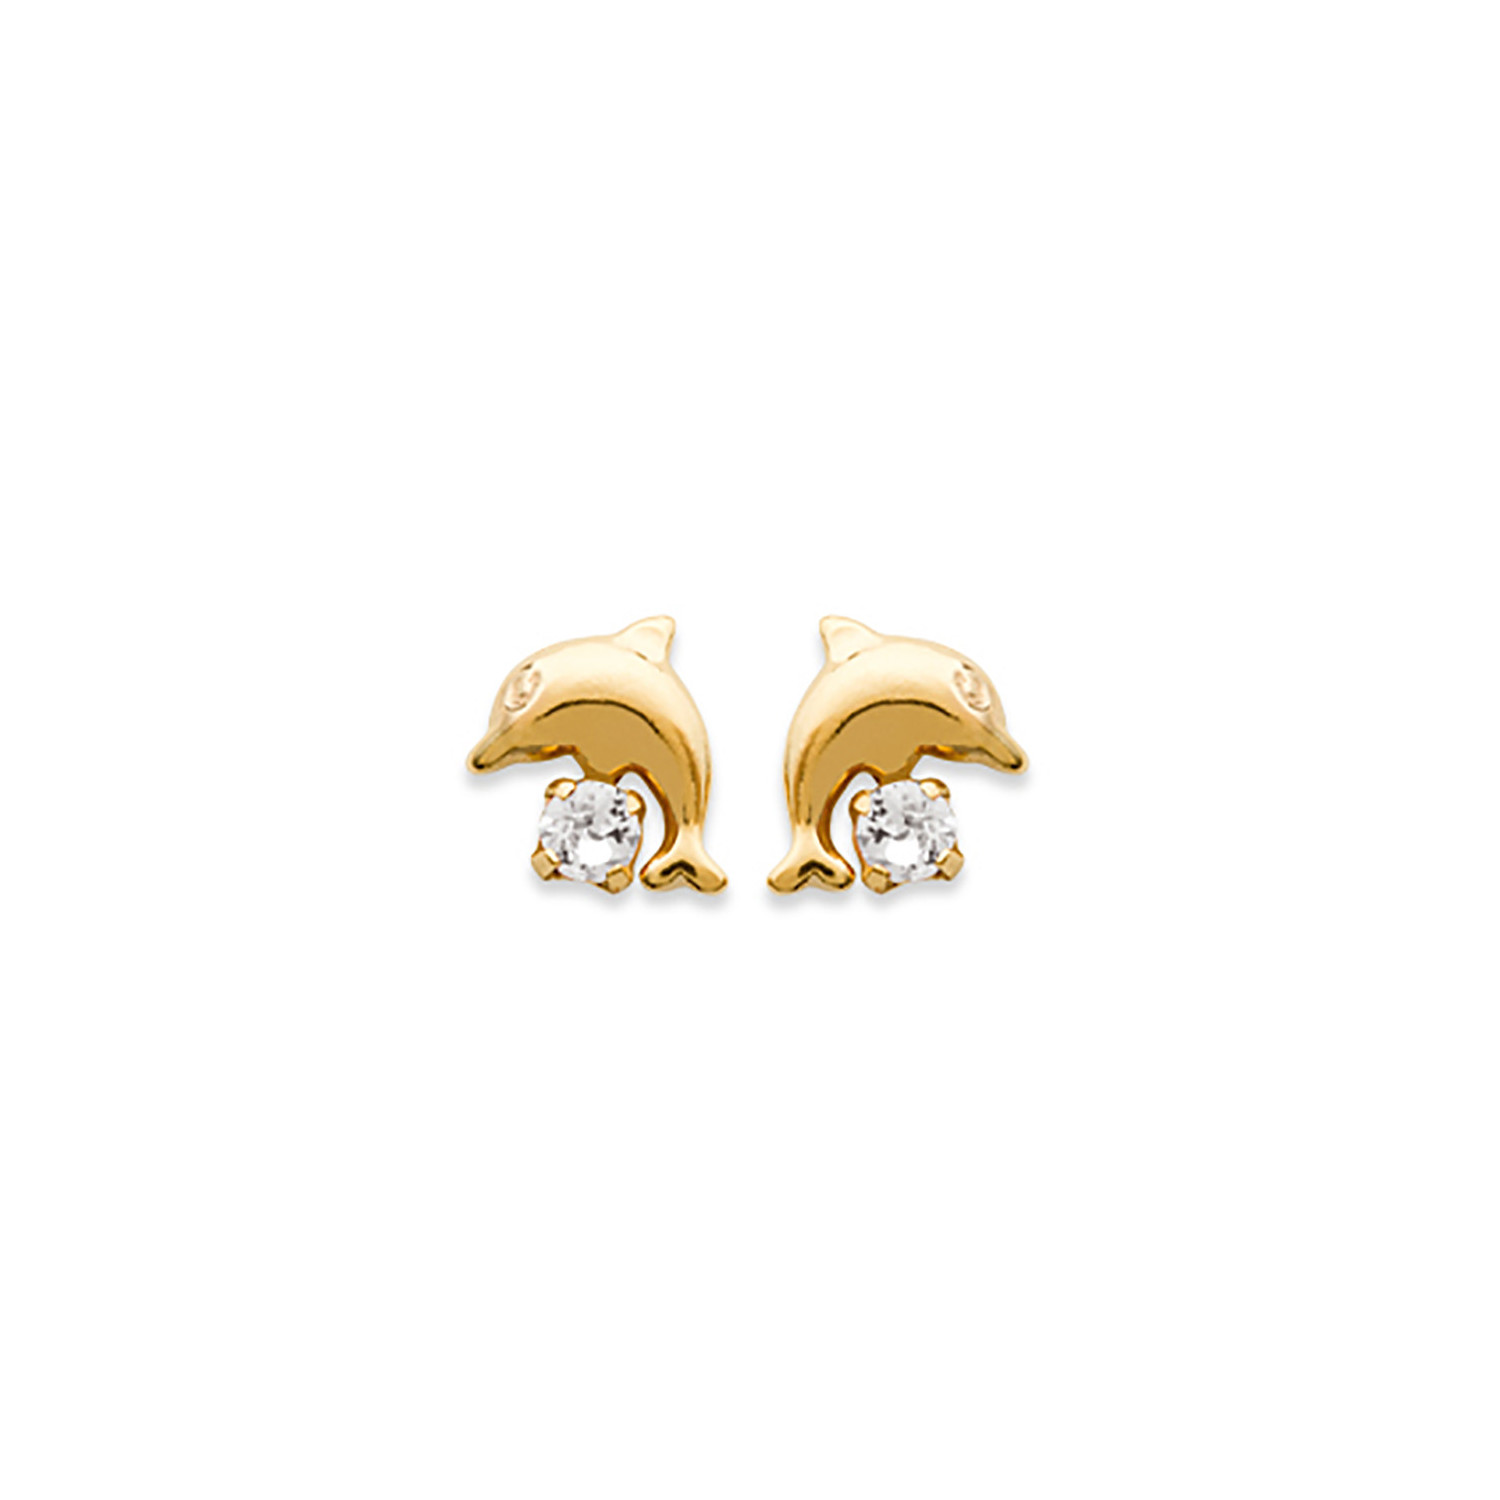 Boucles d'oreilles Brillaxis dauphin
plaqué or et oxyde de zirconium